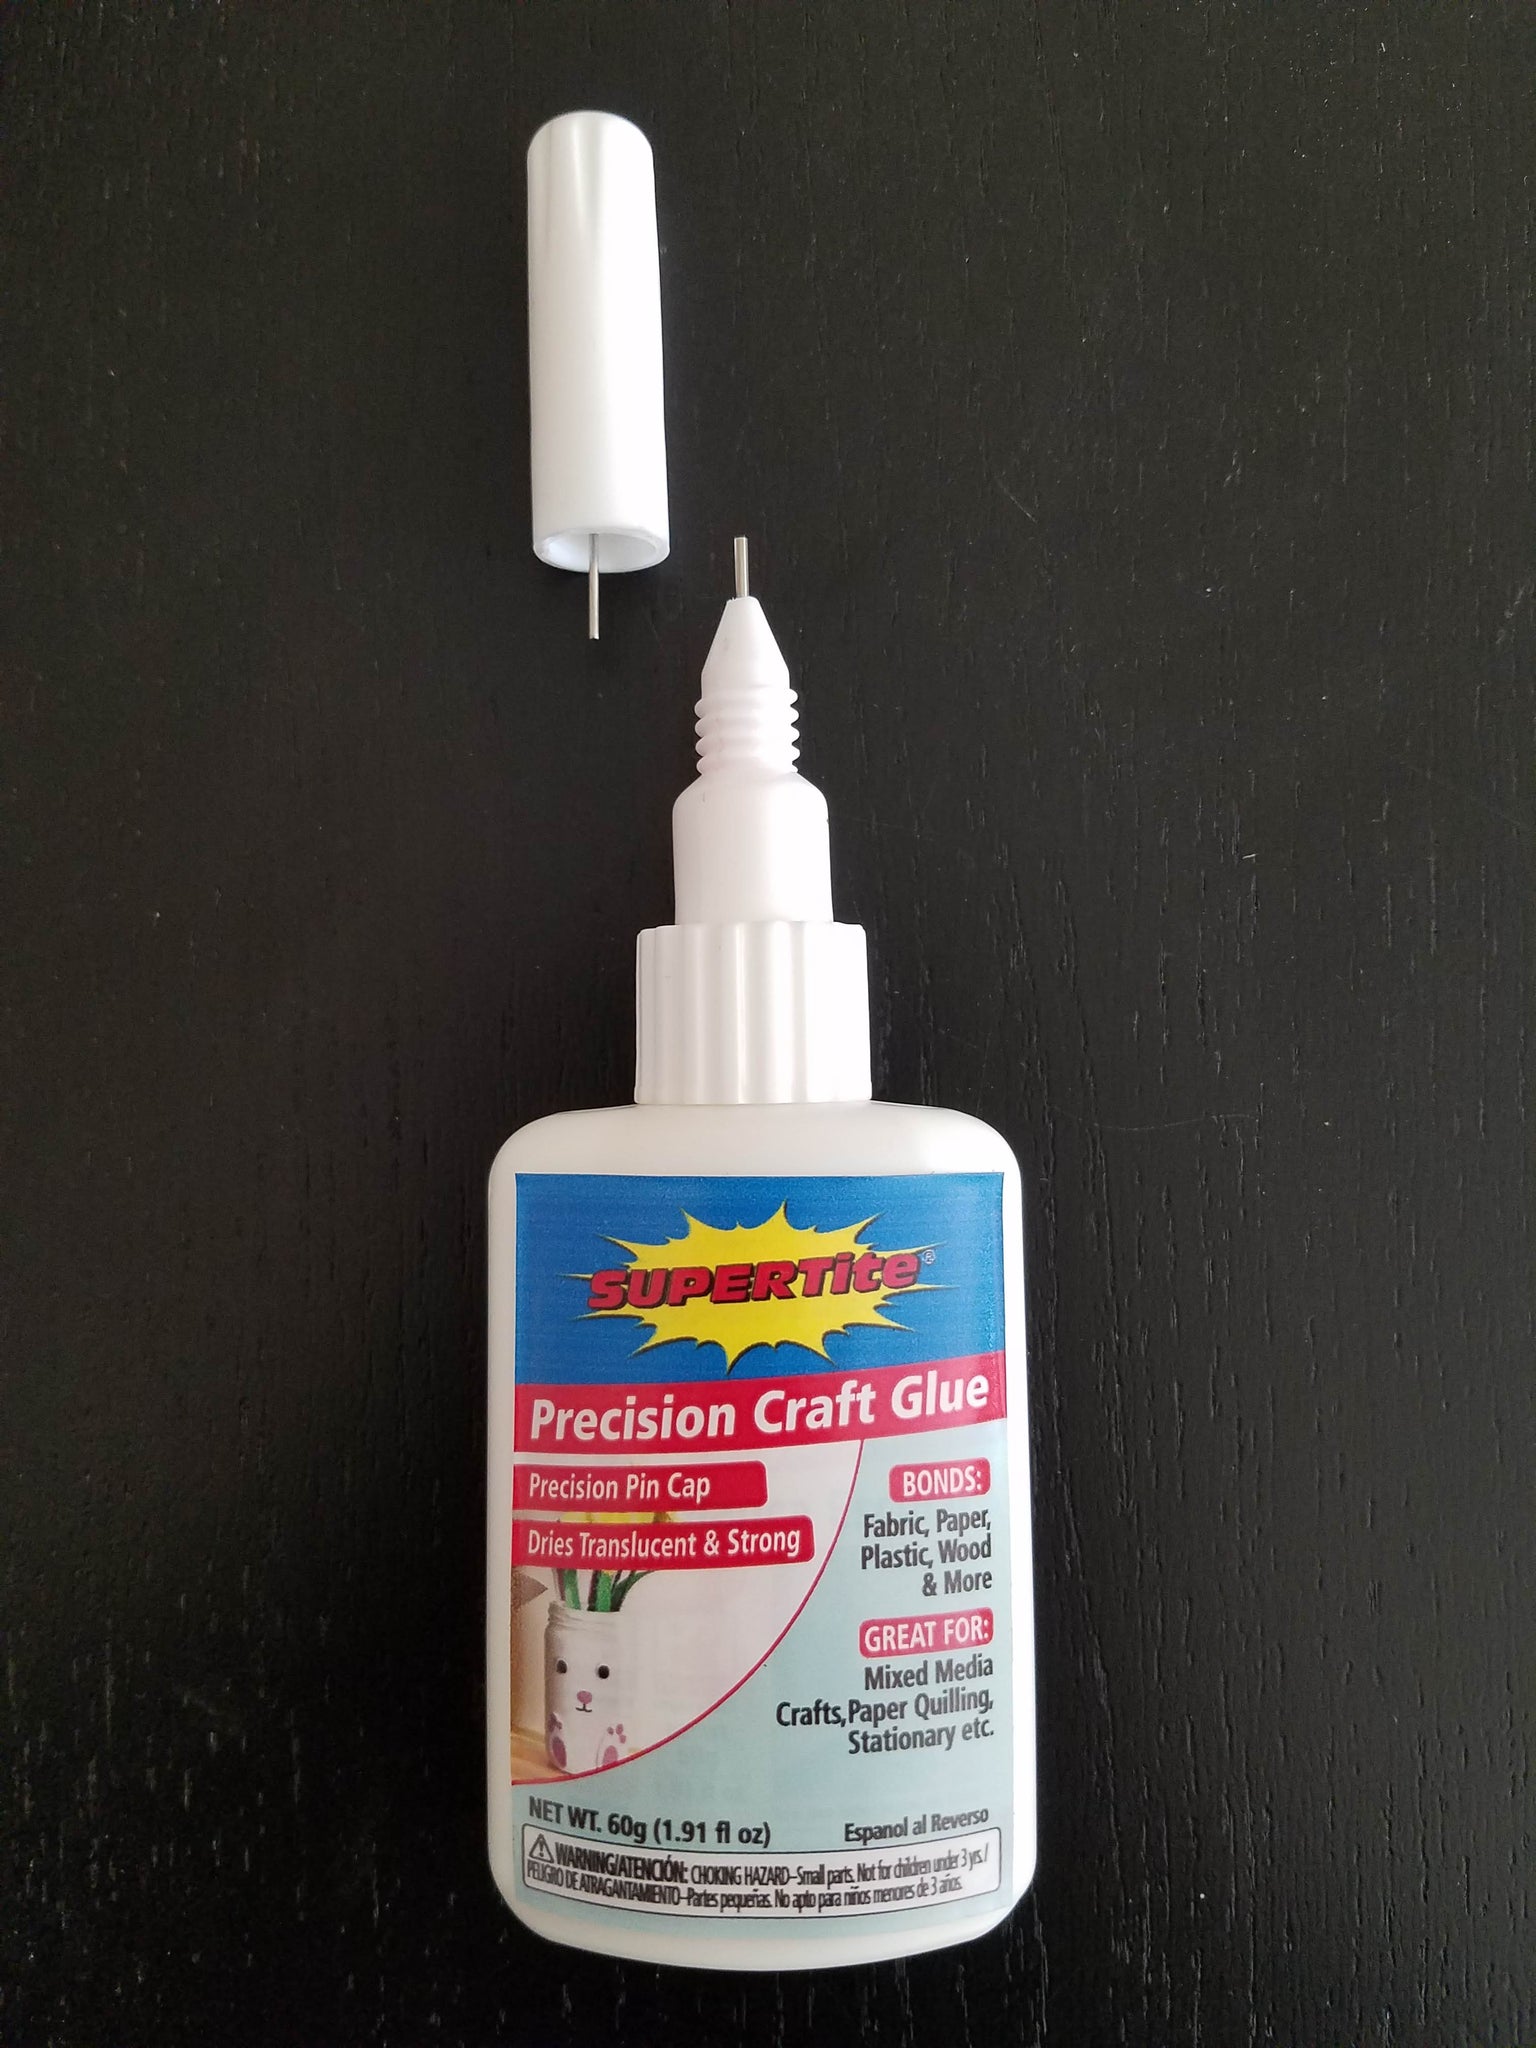 Precision Craft Glue (60g/1.91fl oz) with Pin Cap, Ref. 1113 – Supertite  Adhesives